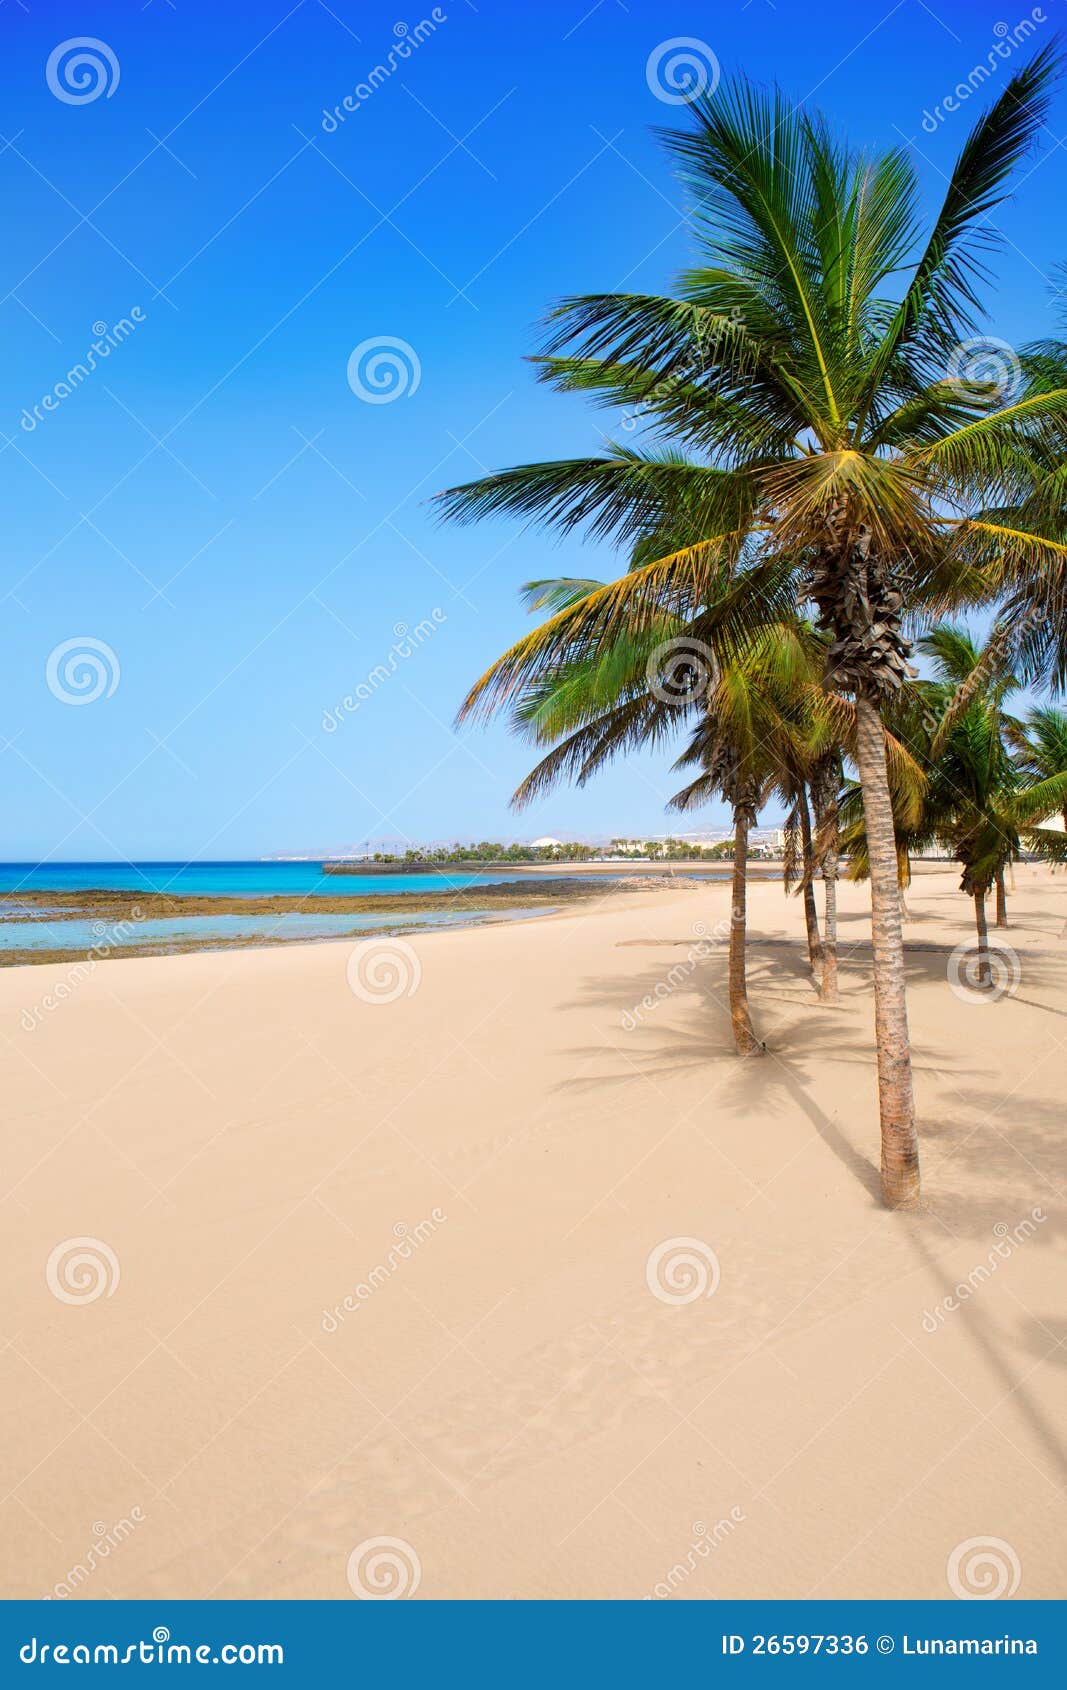 arrecife lanzarote playa reducto beach palm trees